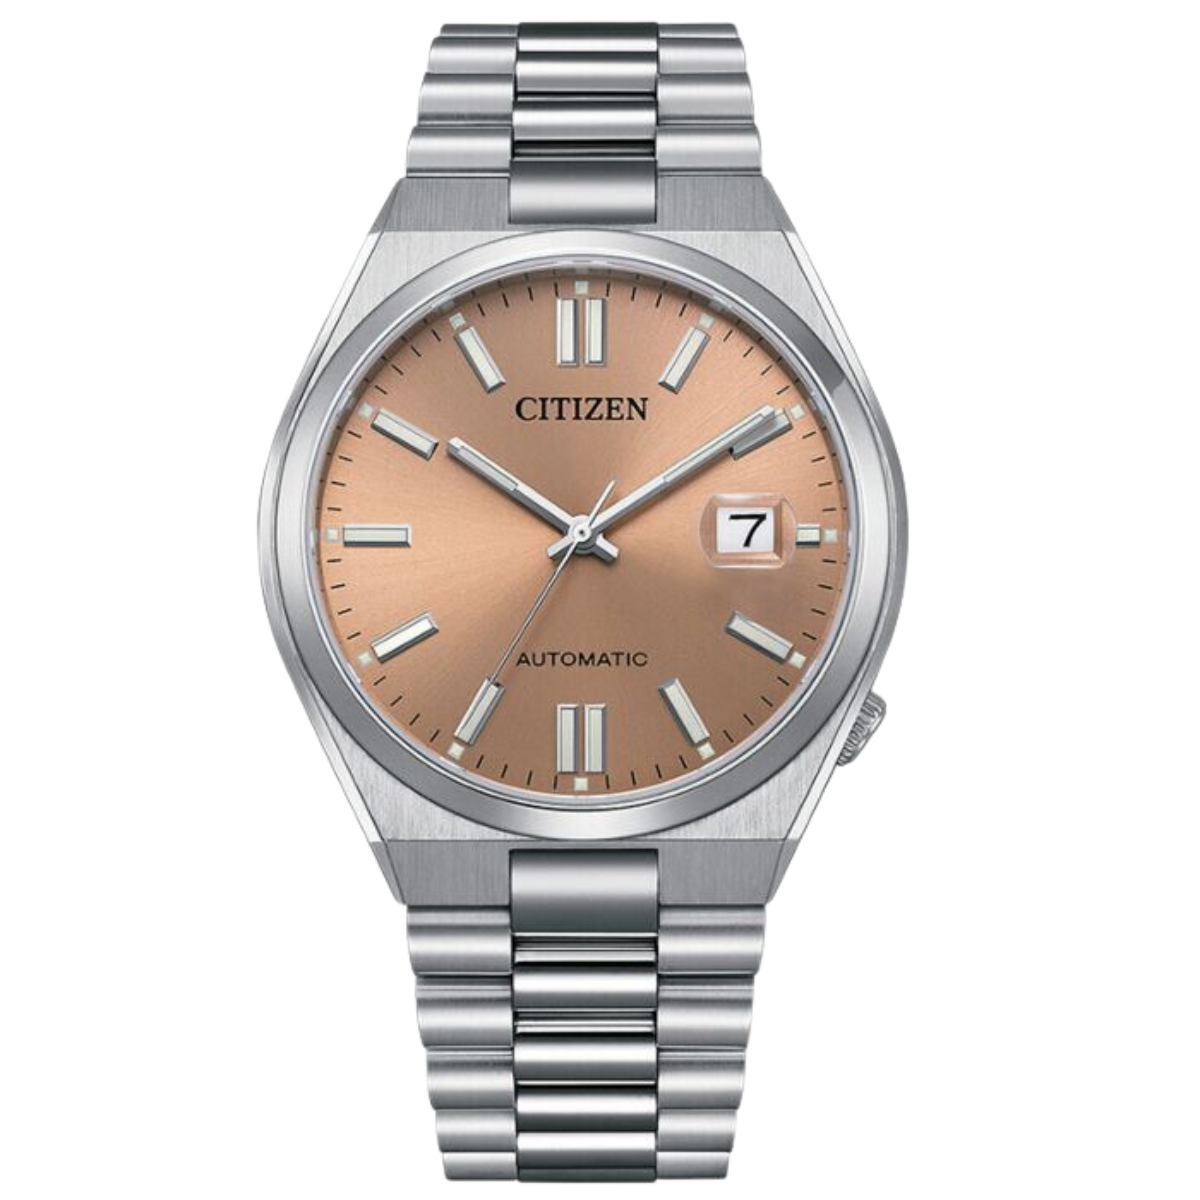 Citizen X Pantone Automatic WARM SAND Ltd Watch - NJ0158-89Y